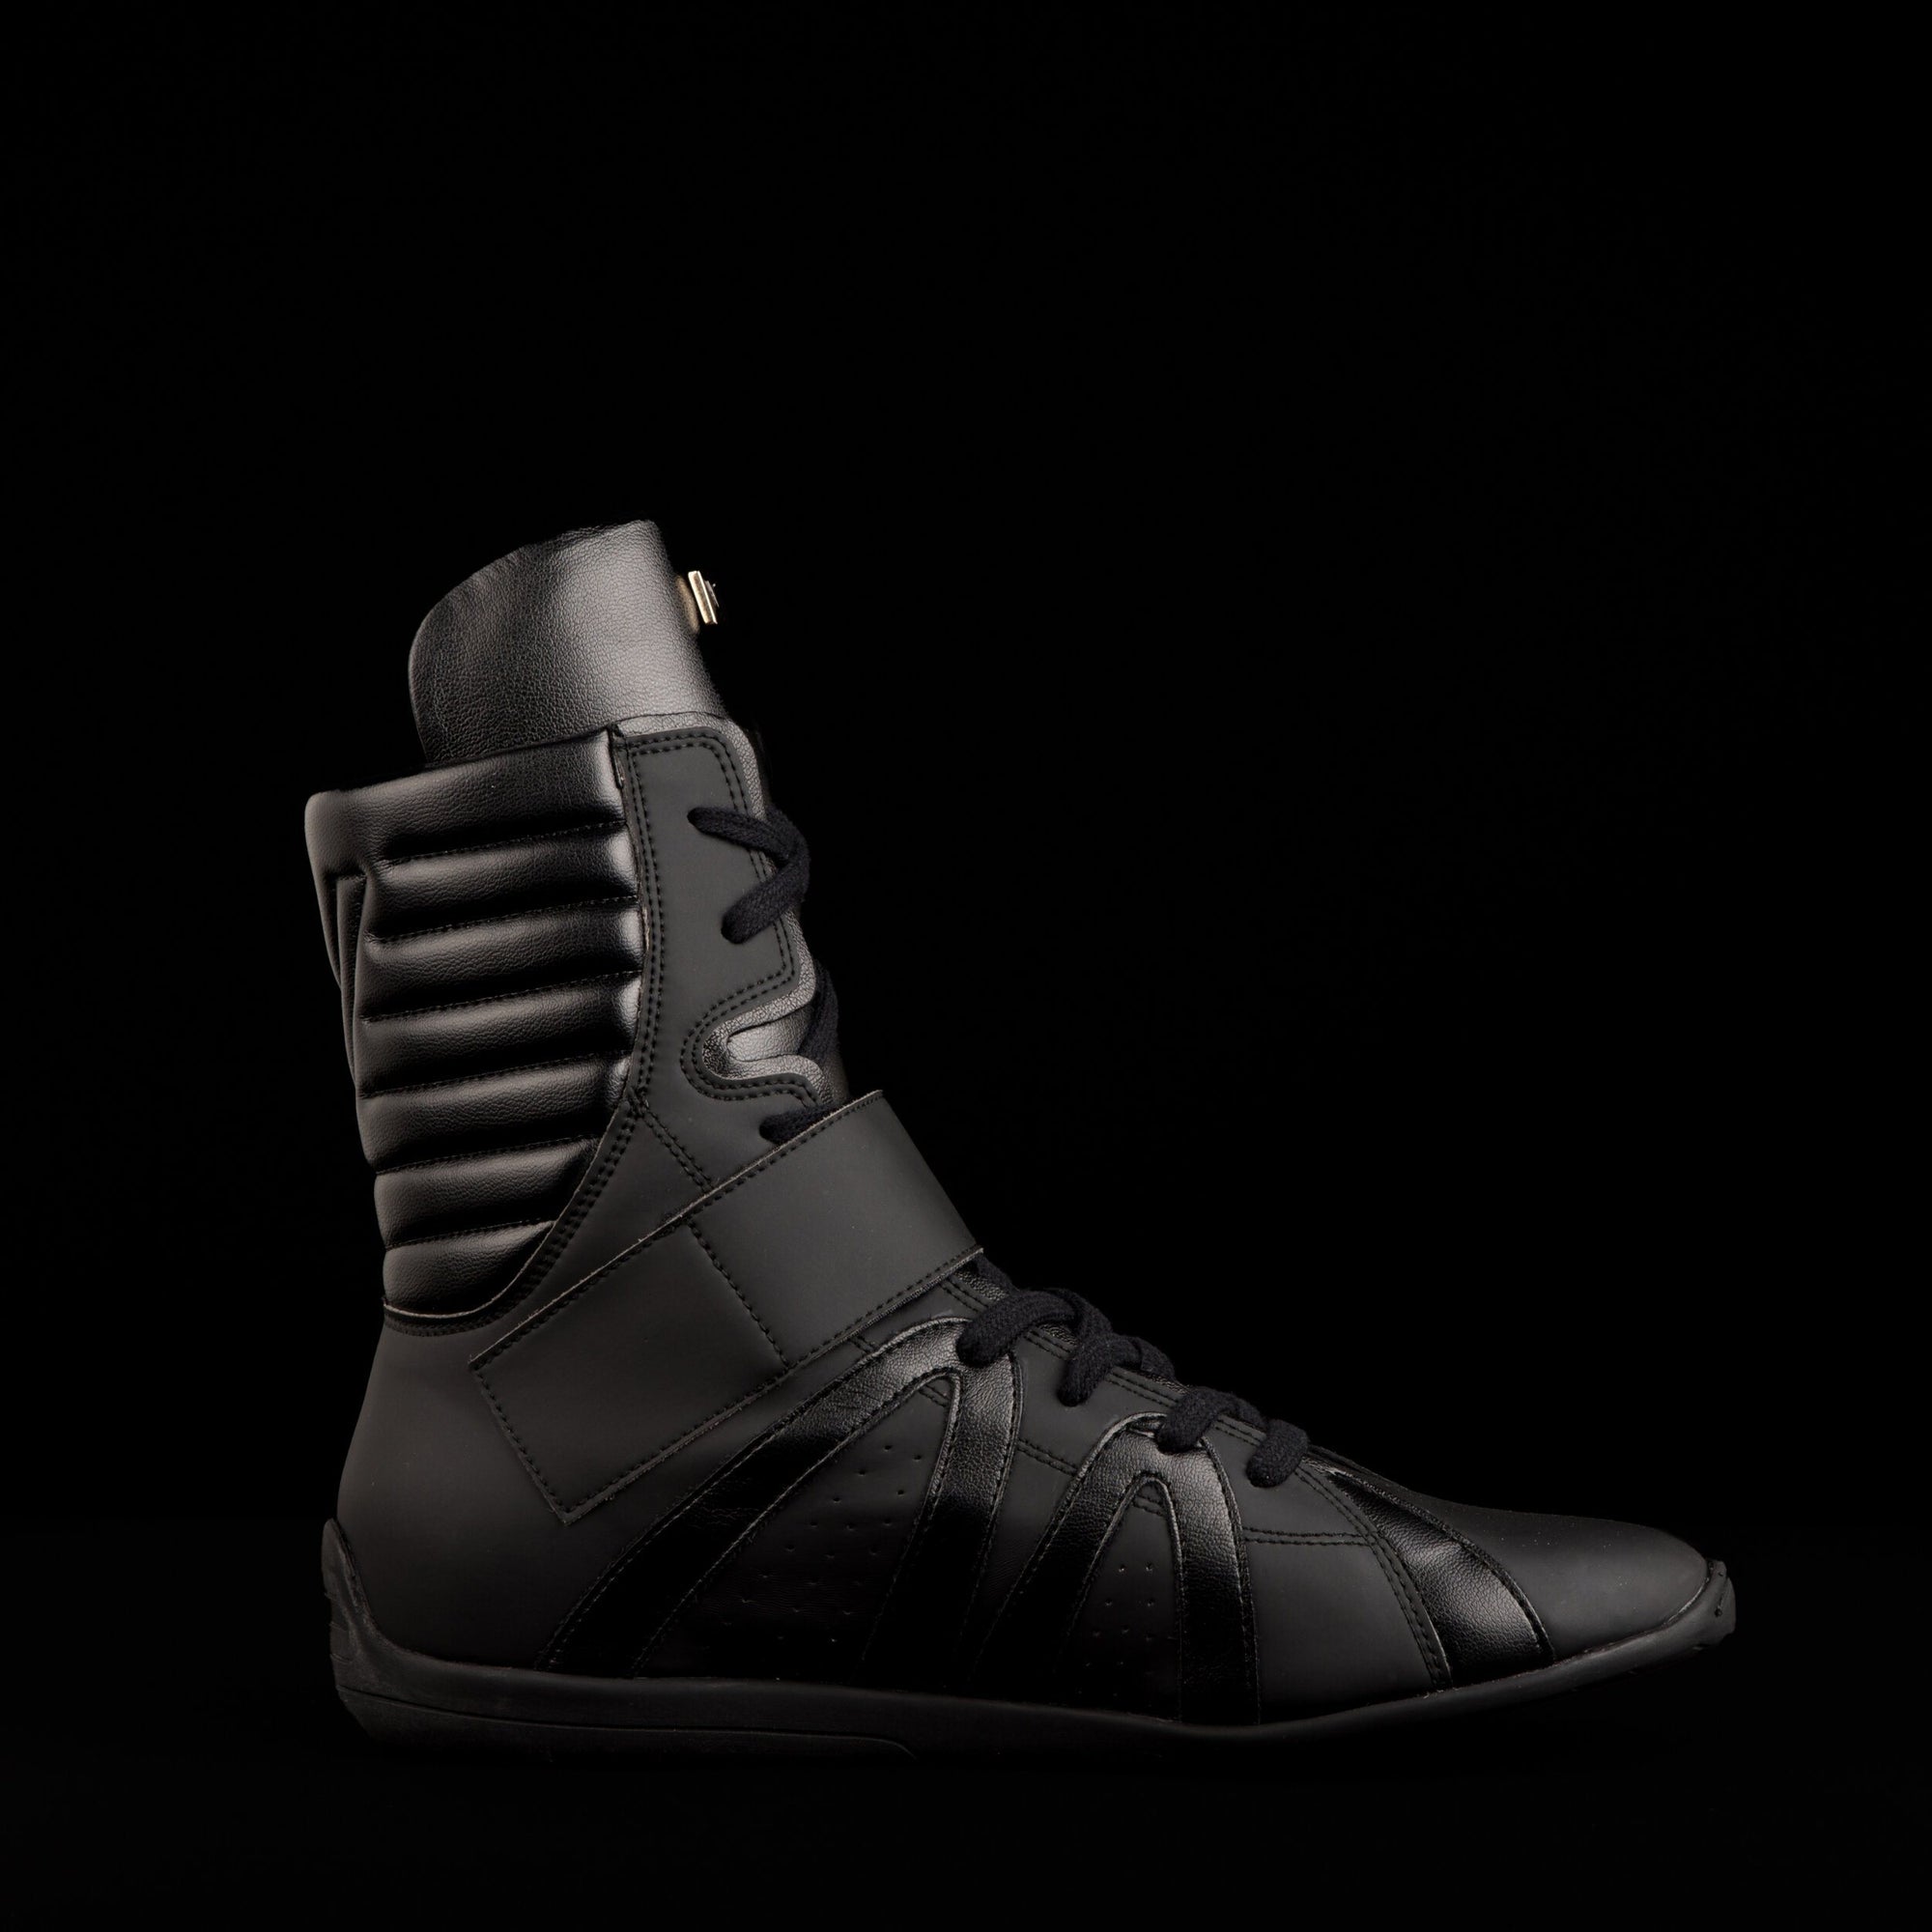 design black high top boxing shoes free shipping virtuosboxing